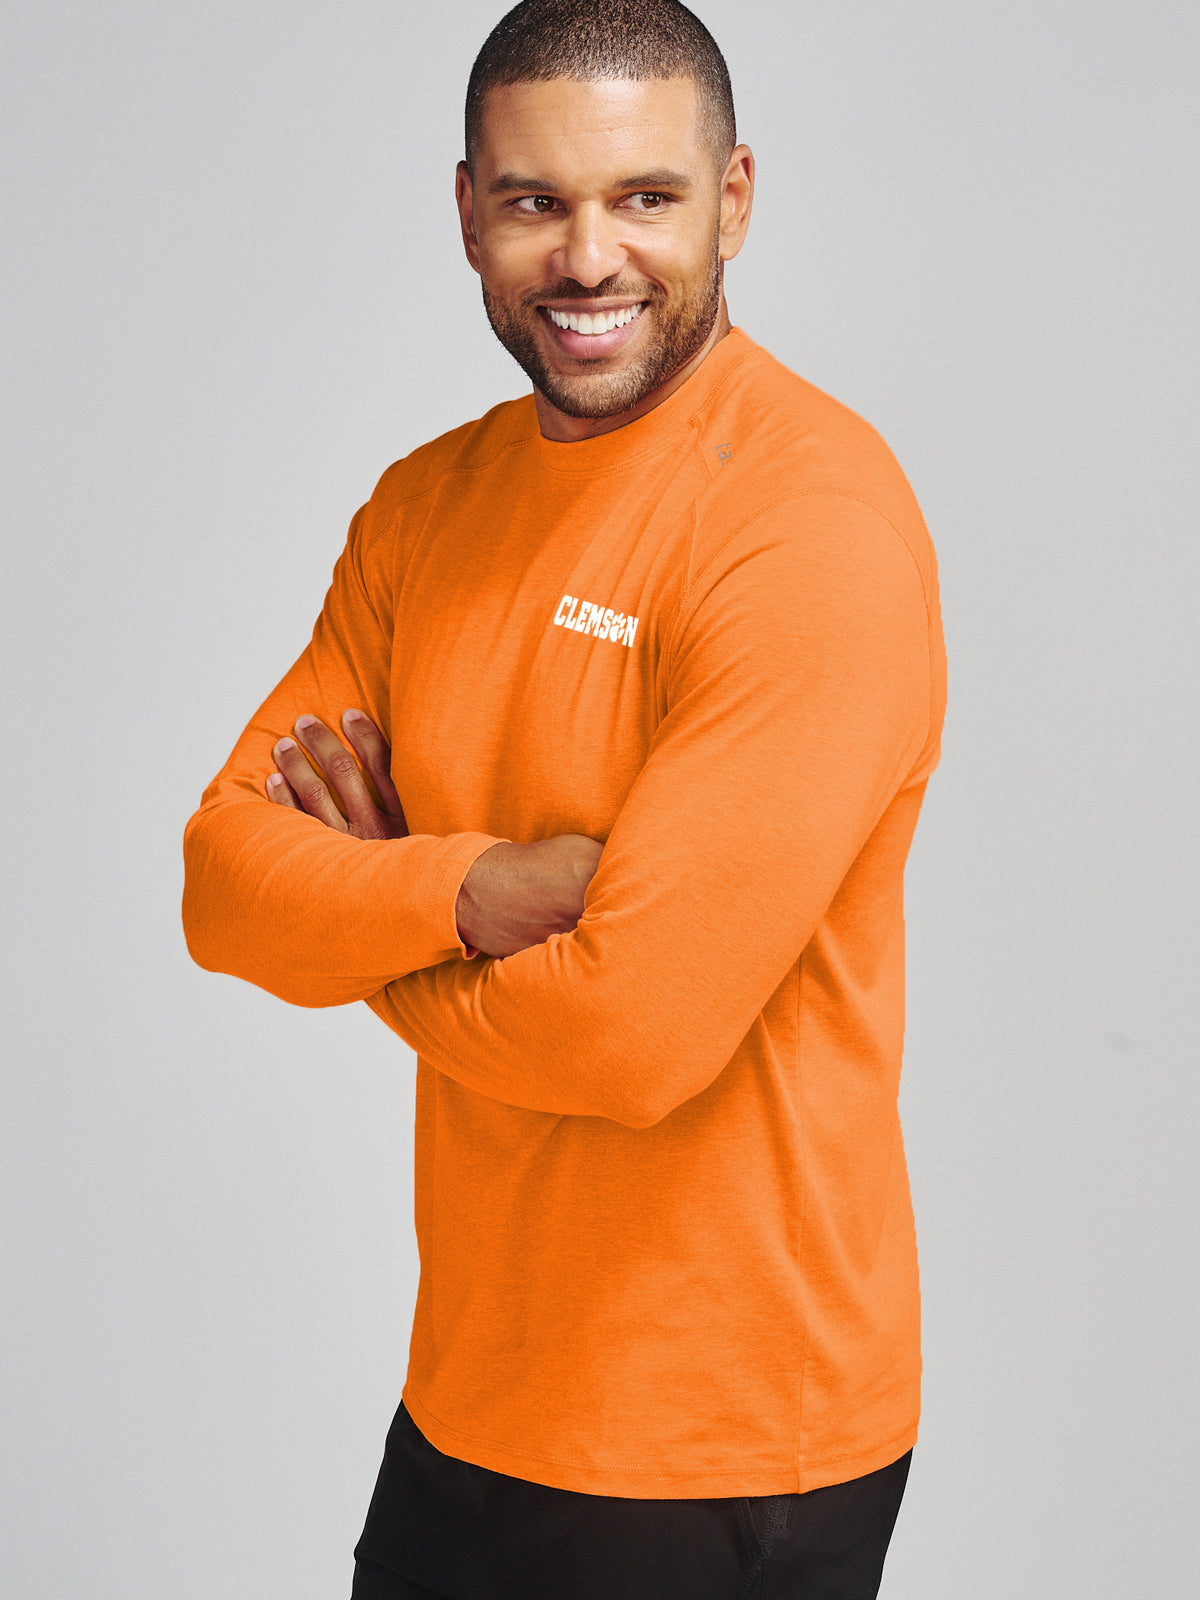 Carrollton Long Sleeve Fitness T-Shirt - Clemson - tasc Performance (OrangeC)